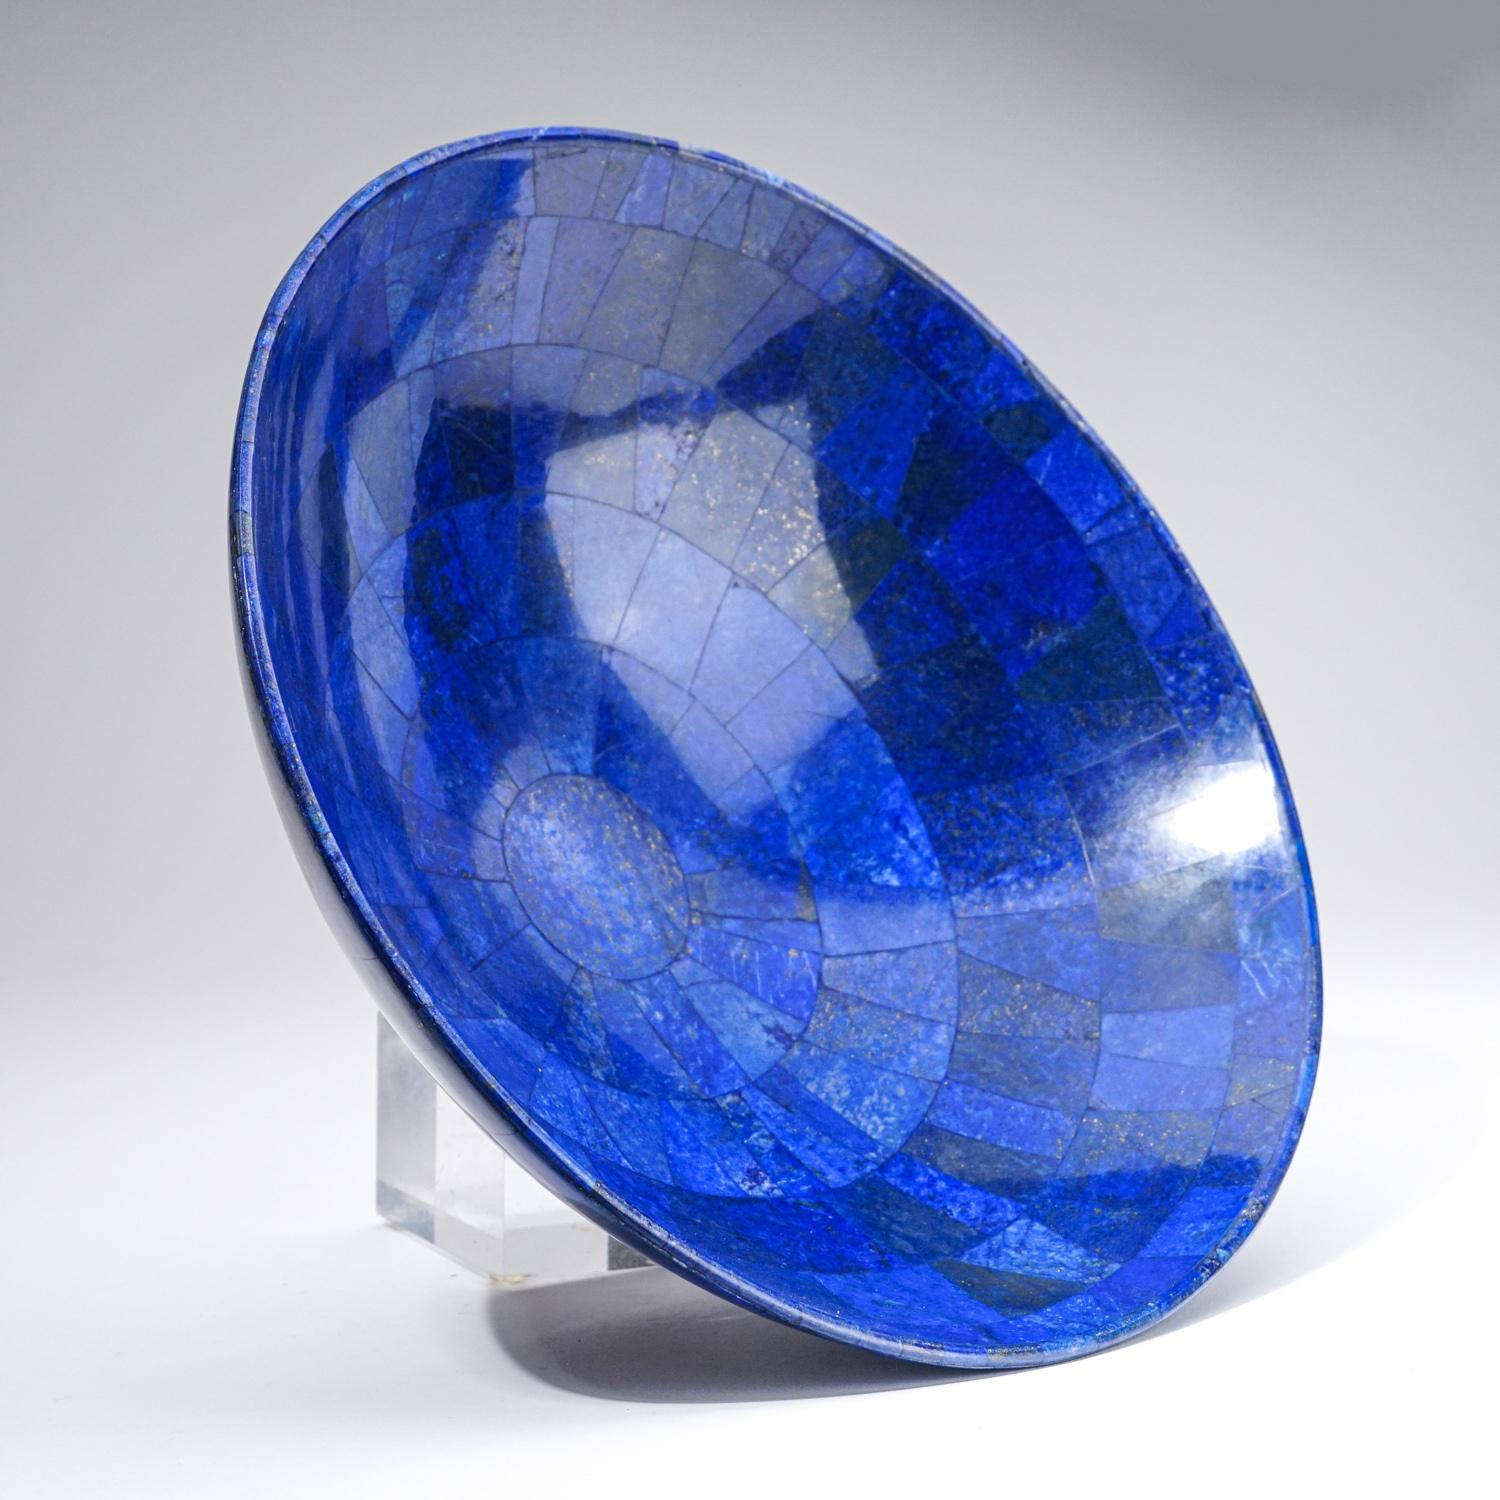 Genuine Polished Lapis Lazuli Bowl (3 lbs) For Sale 1